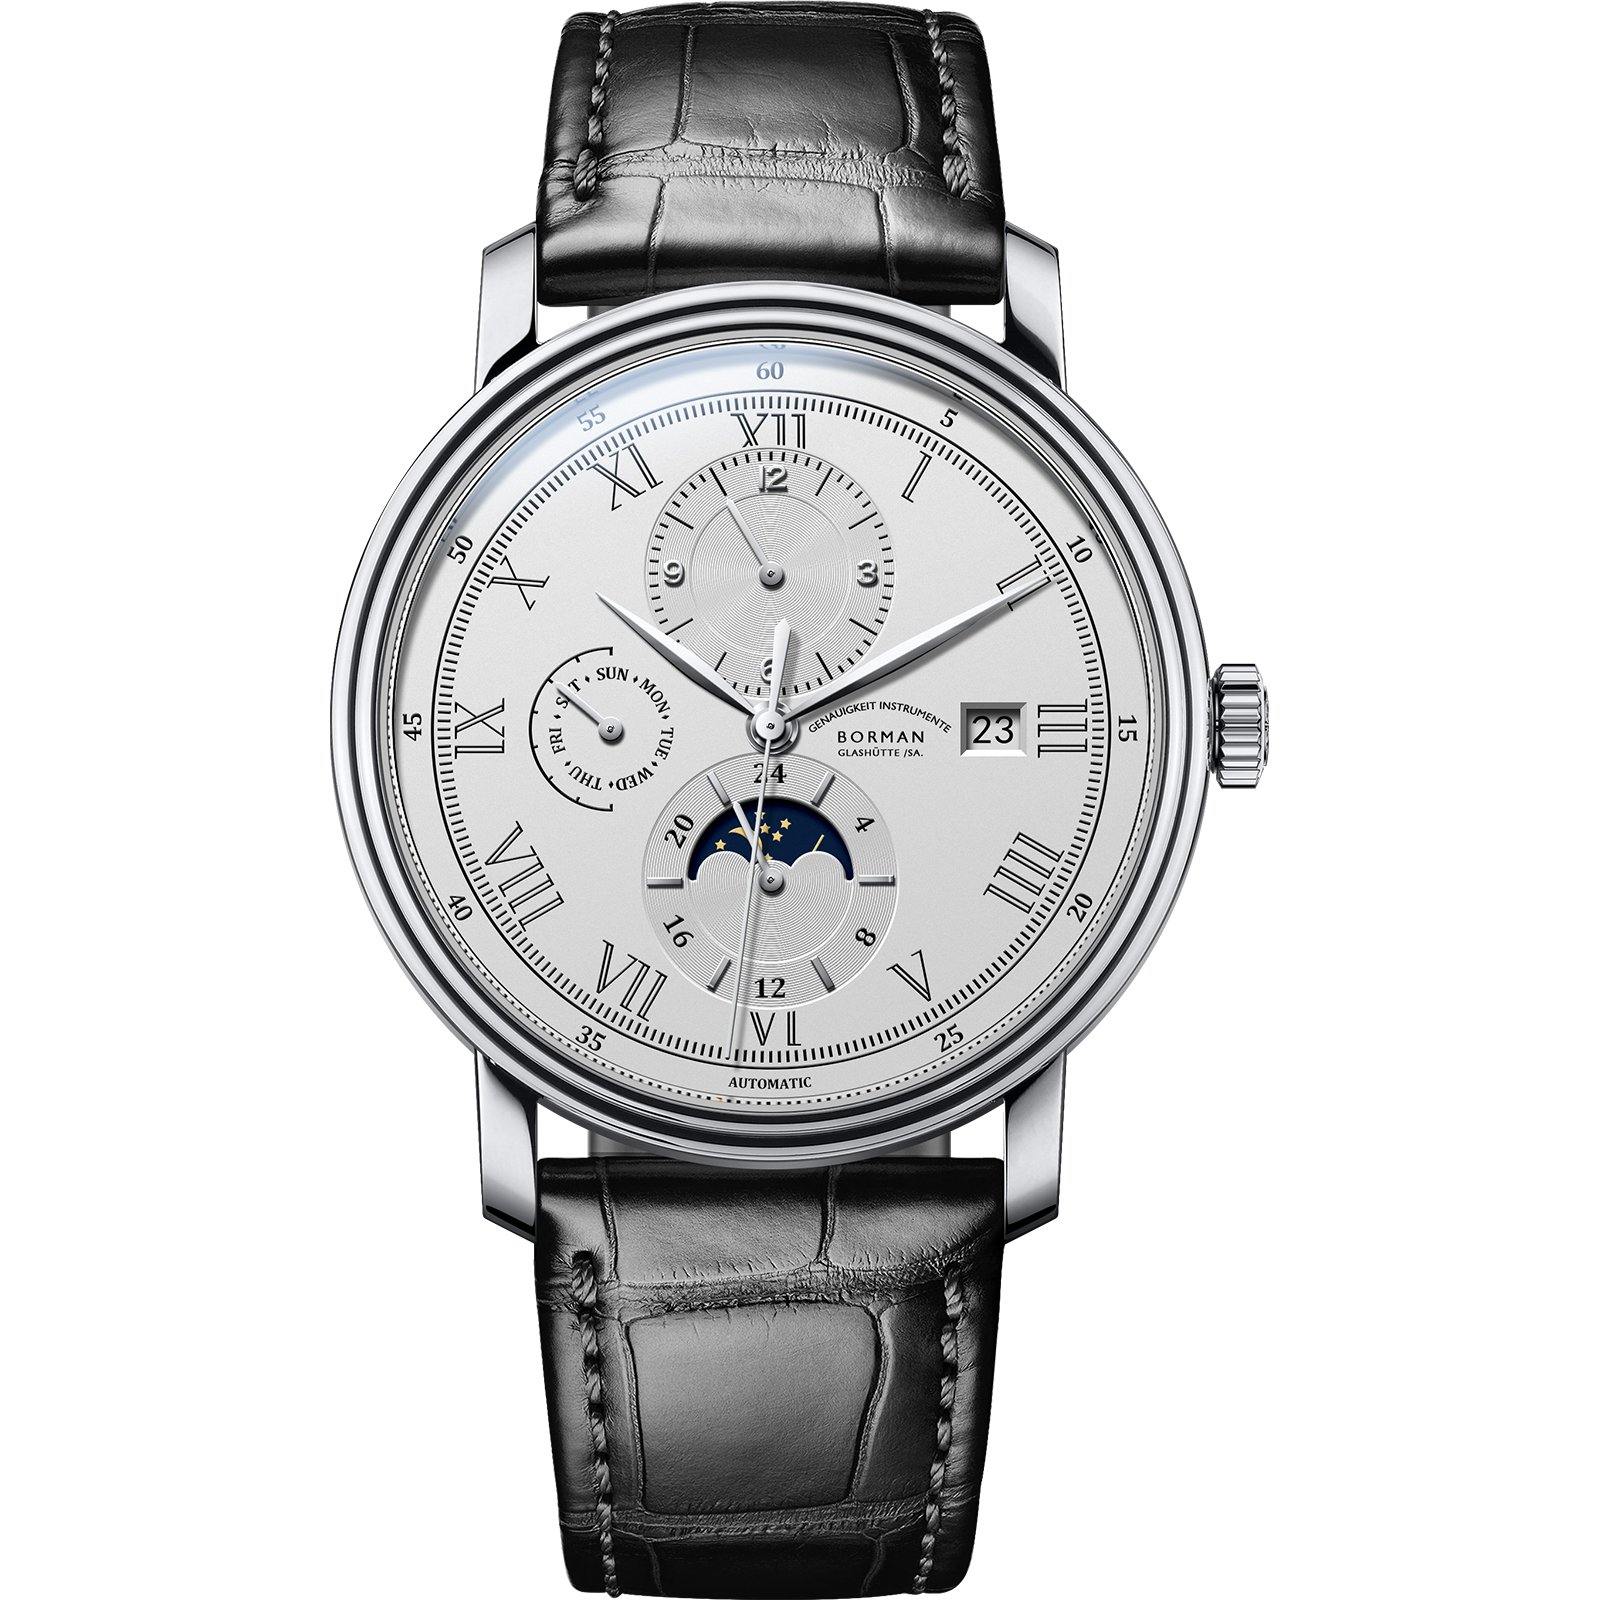 BORMAN 801 Leather Automatic White - Grmontre Watches